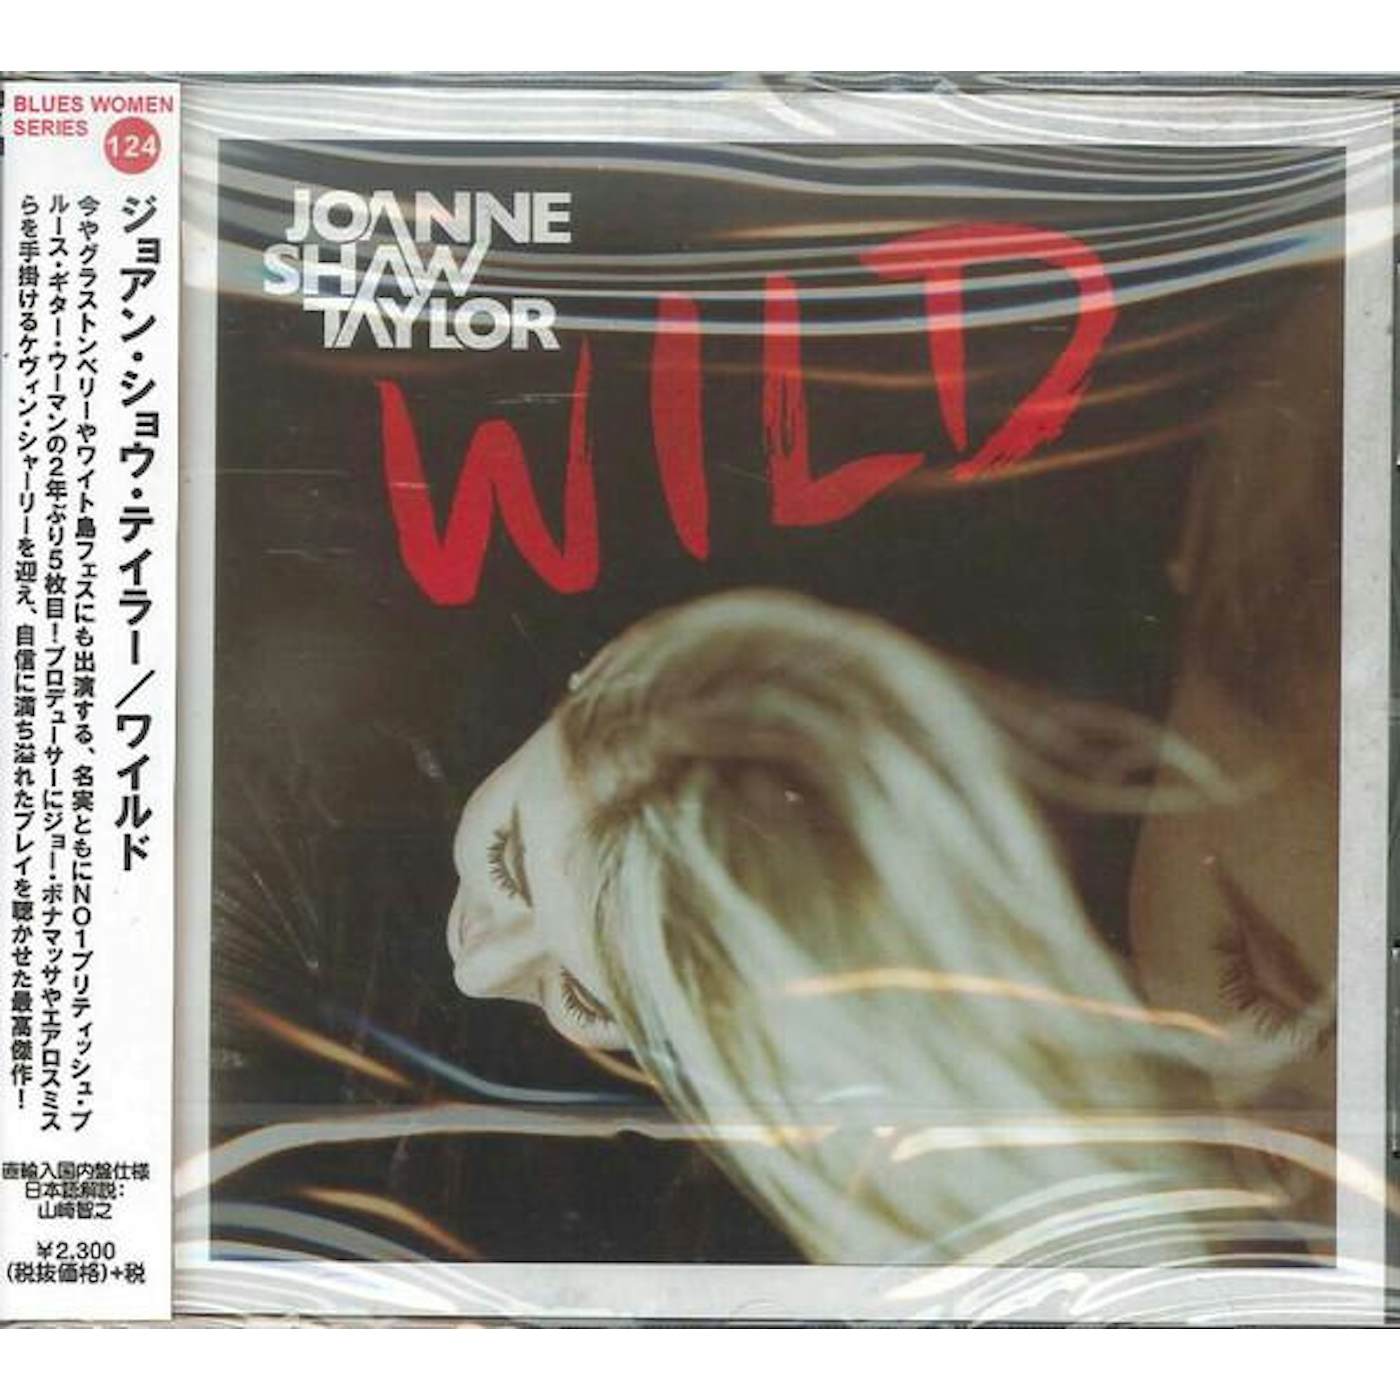 Joanne Shaw Taylor WILD CD